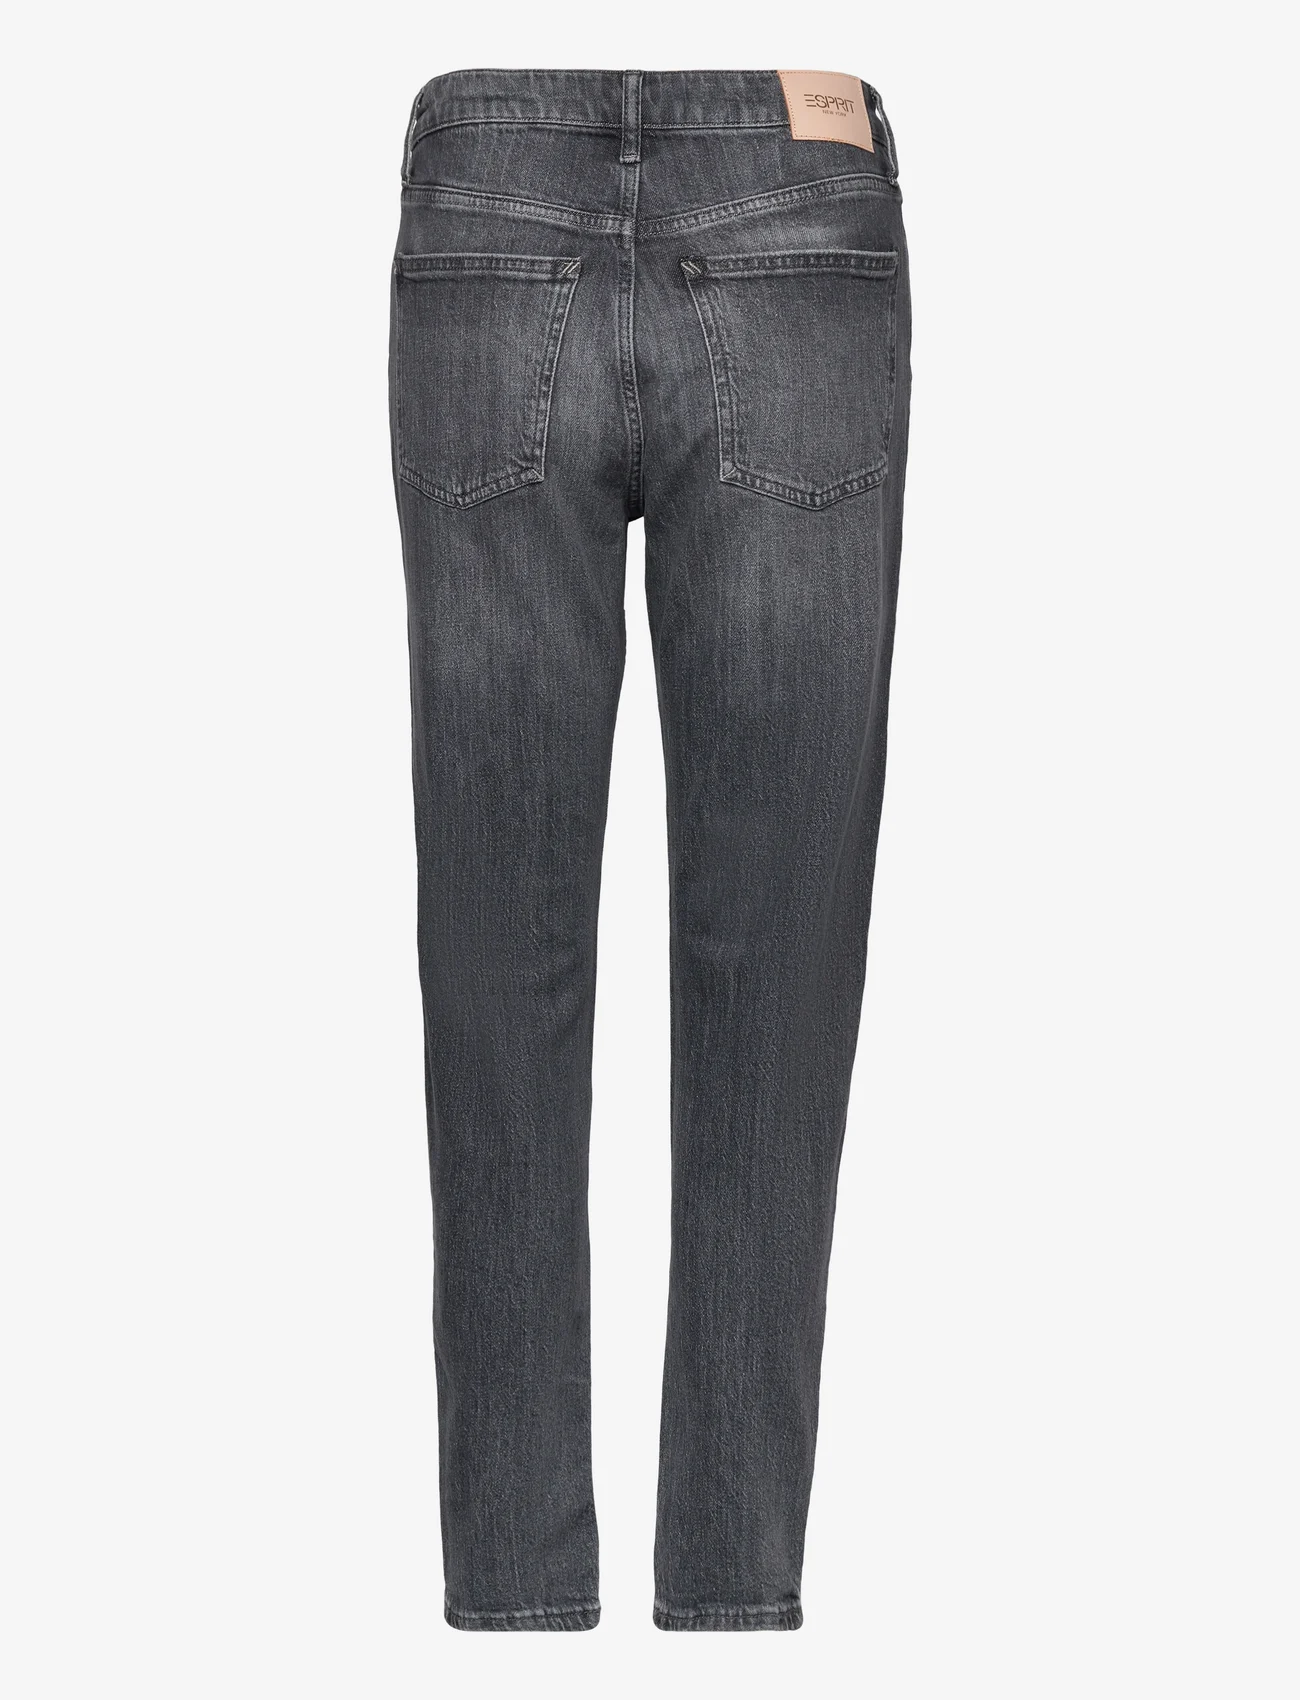 Esprit Casual - Women Pants denim length service - straight jeans - grey medium wash - 1